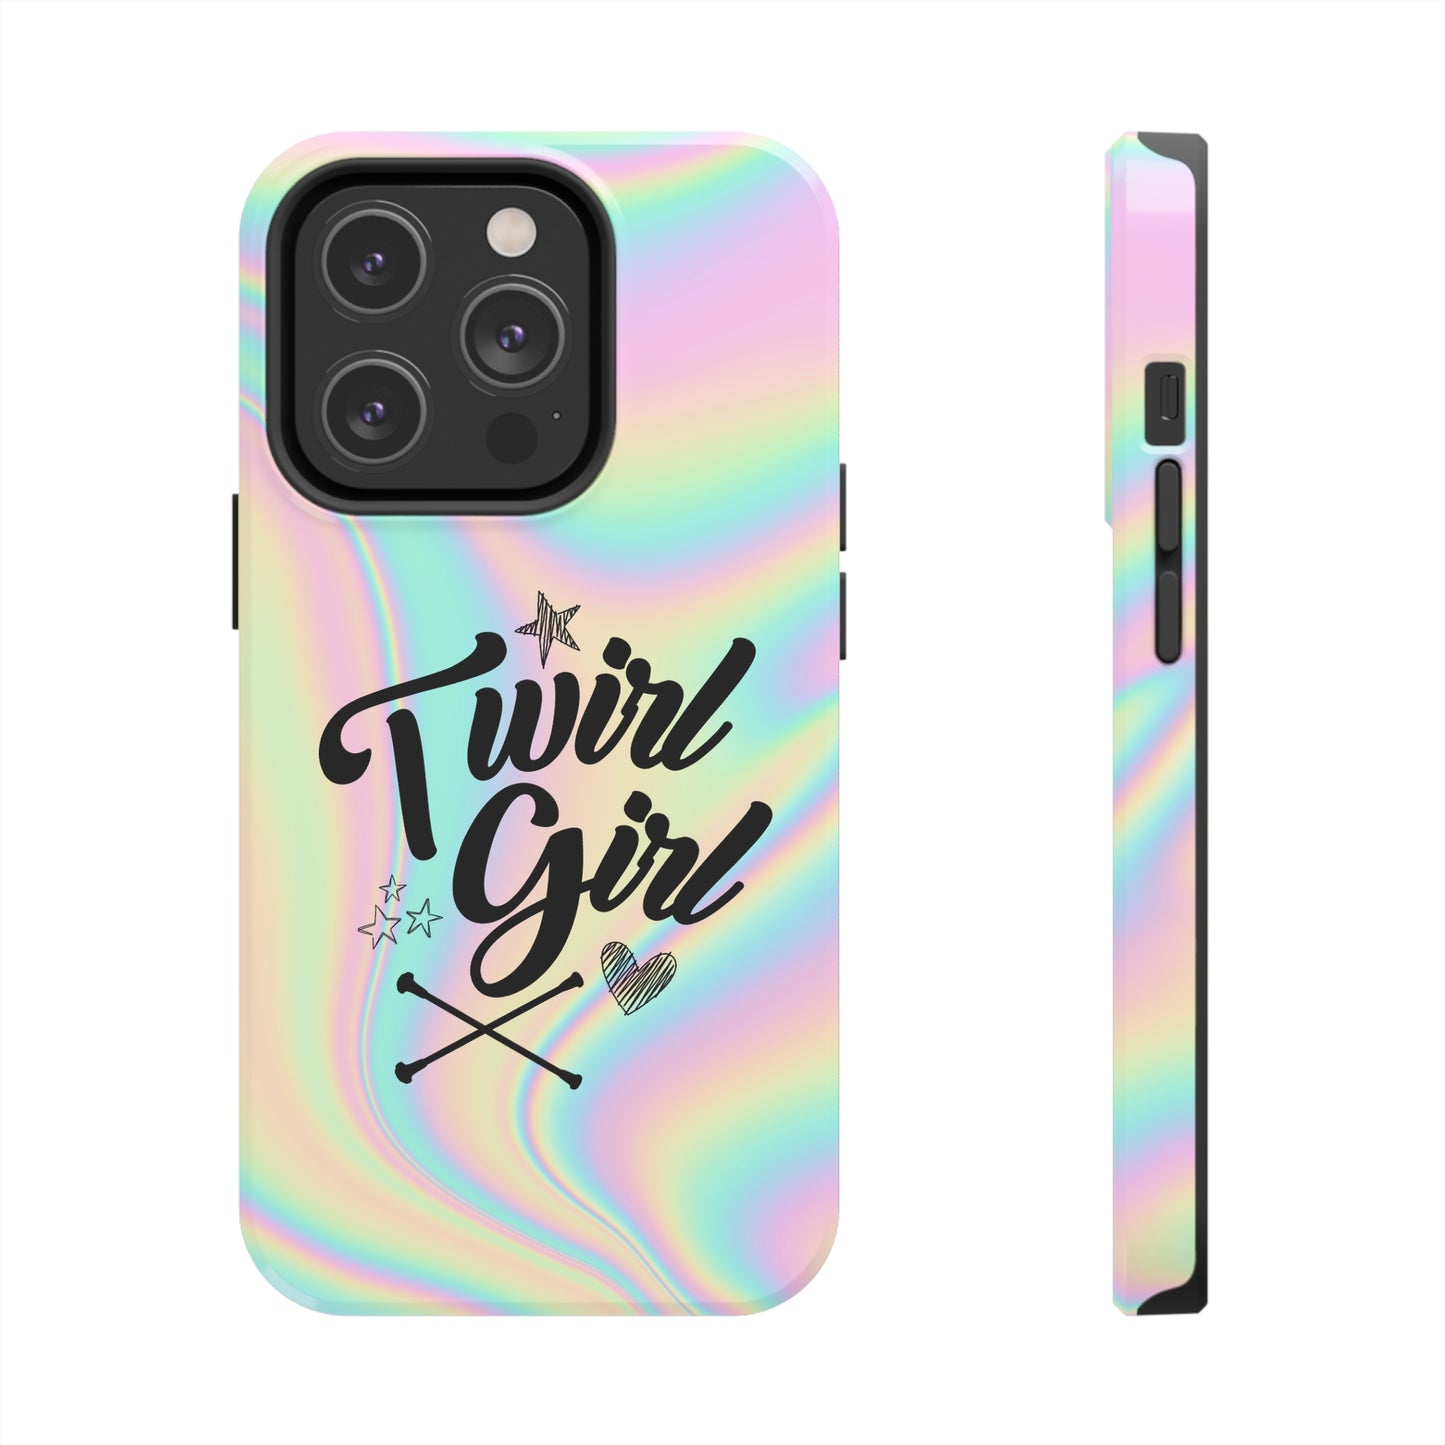 Twirl Girl Phone Case for iPhone, Baton Twirler Phone Case, Twirler Gift